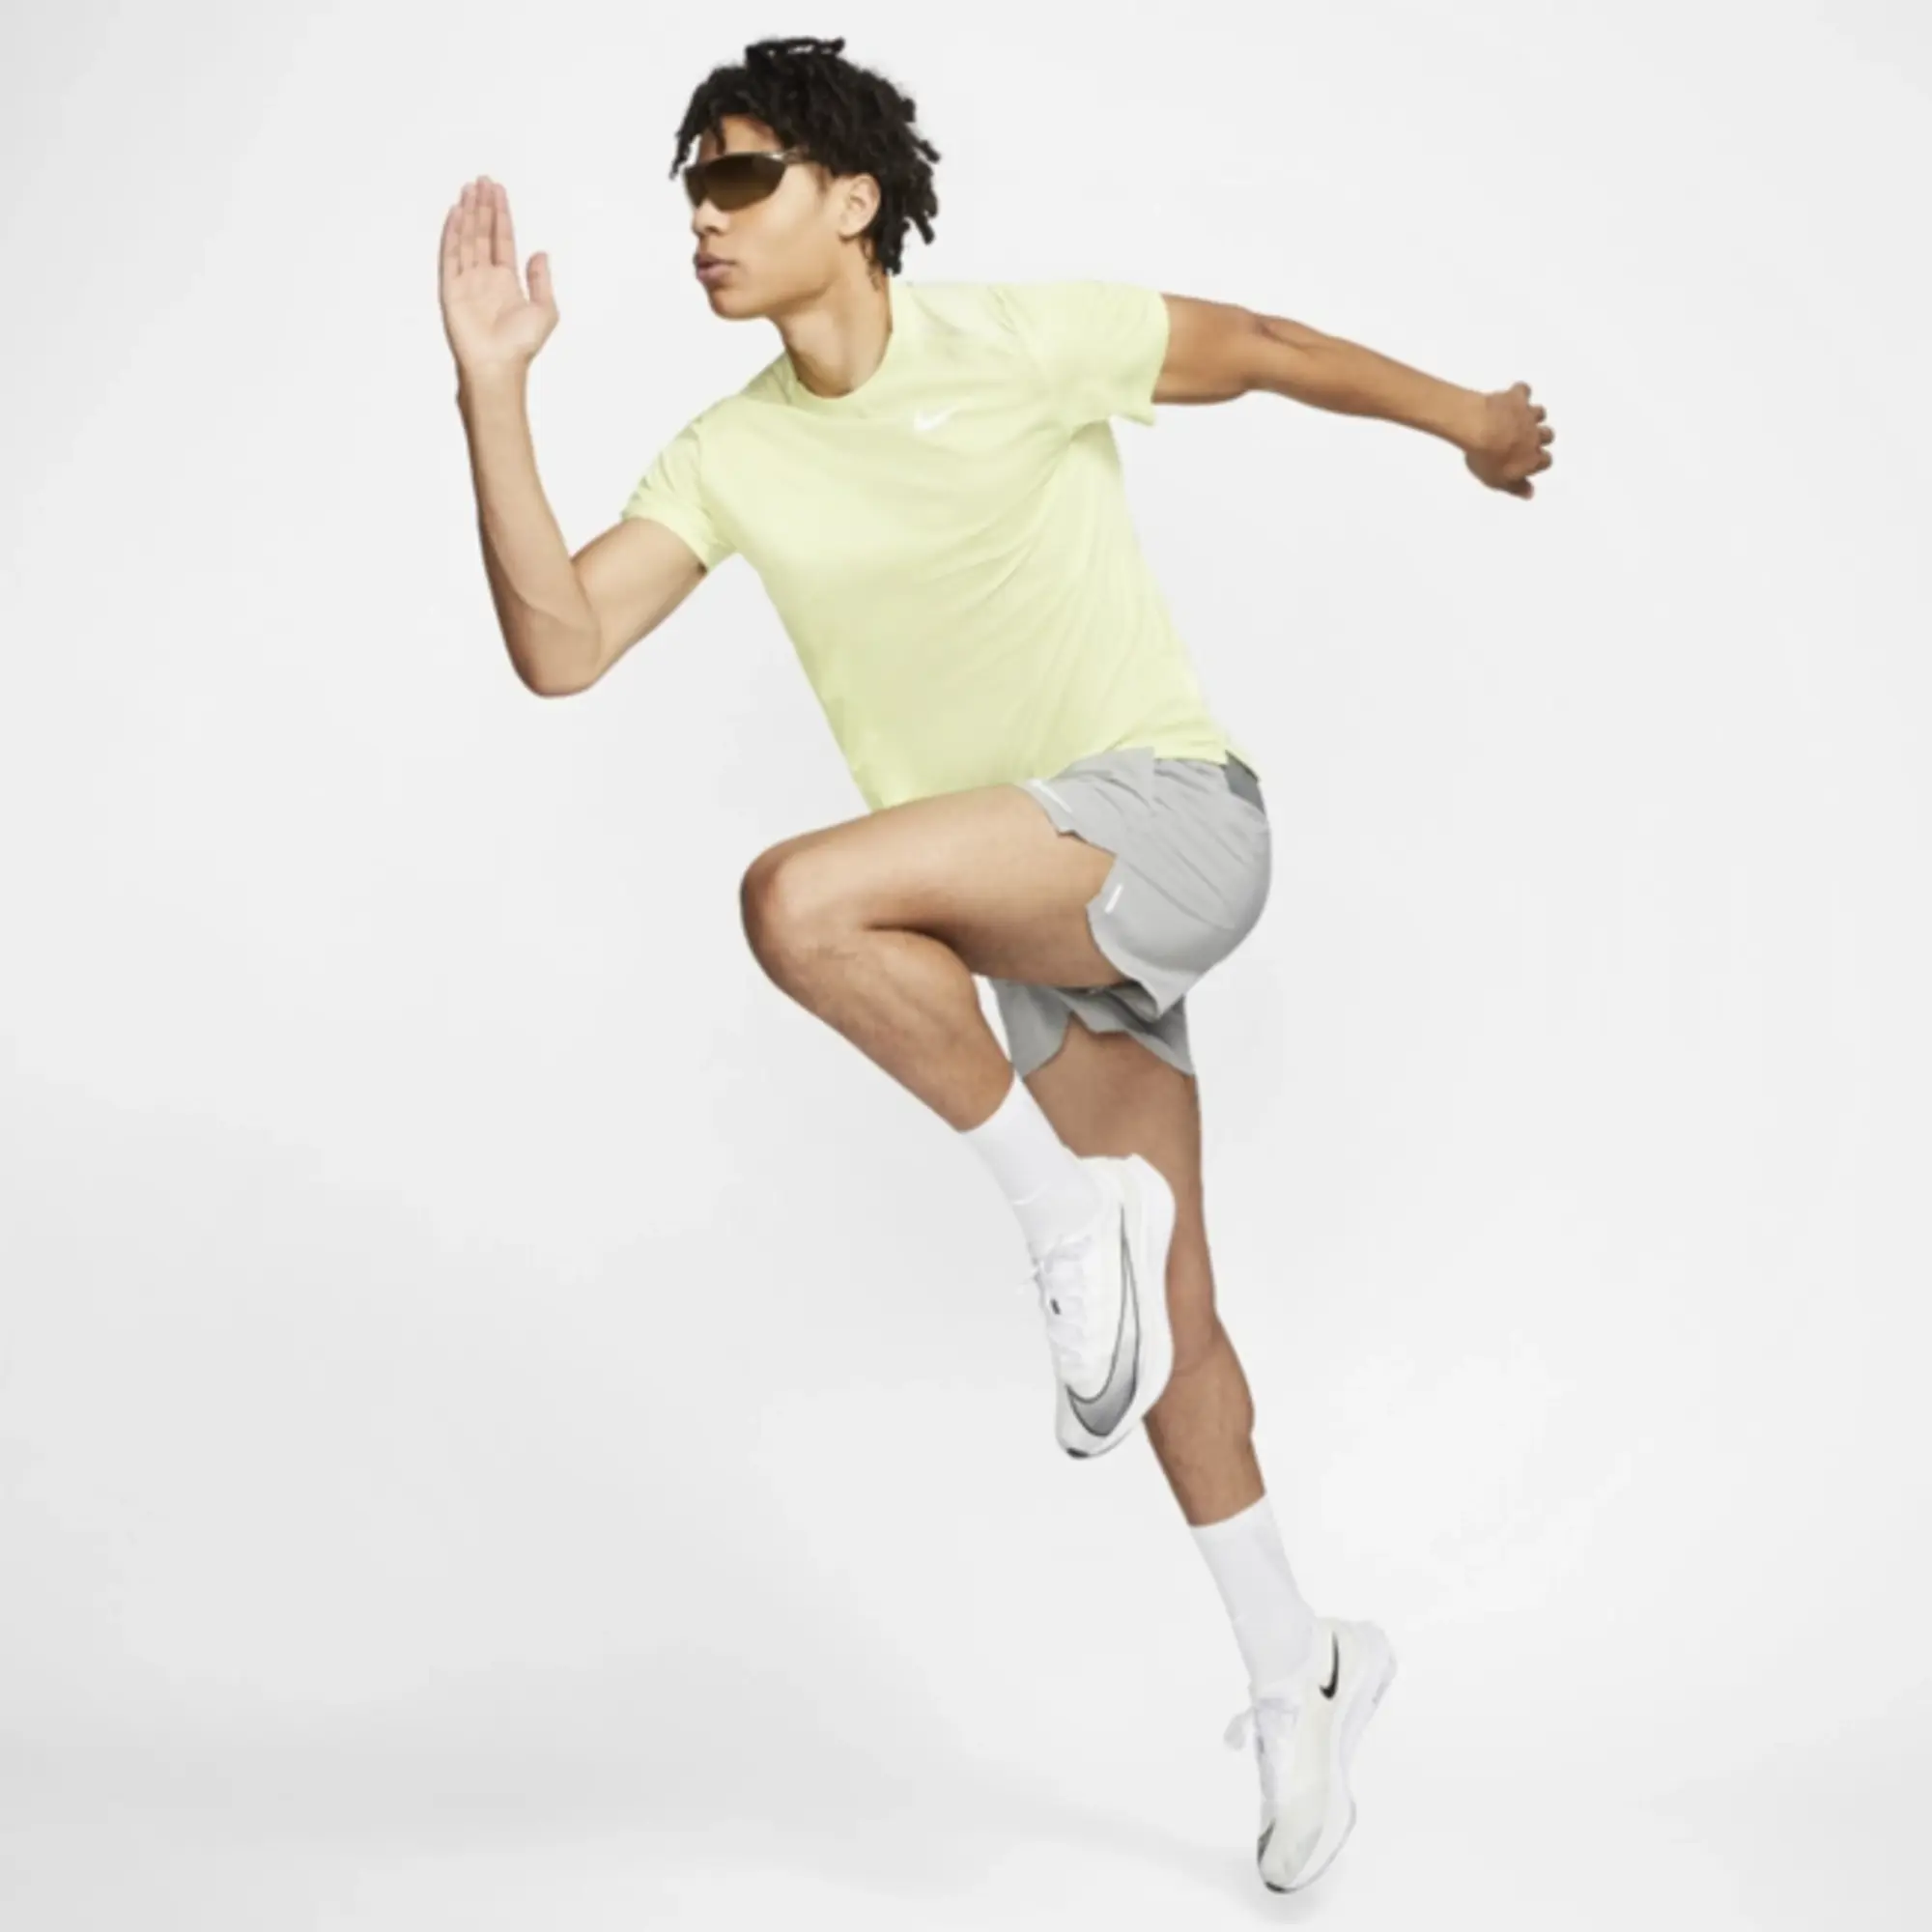 Nike Flex Stride Men's 13cm (approx.) Brief Running Shorts - Grey